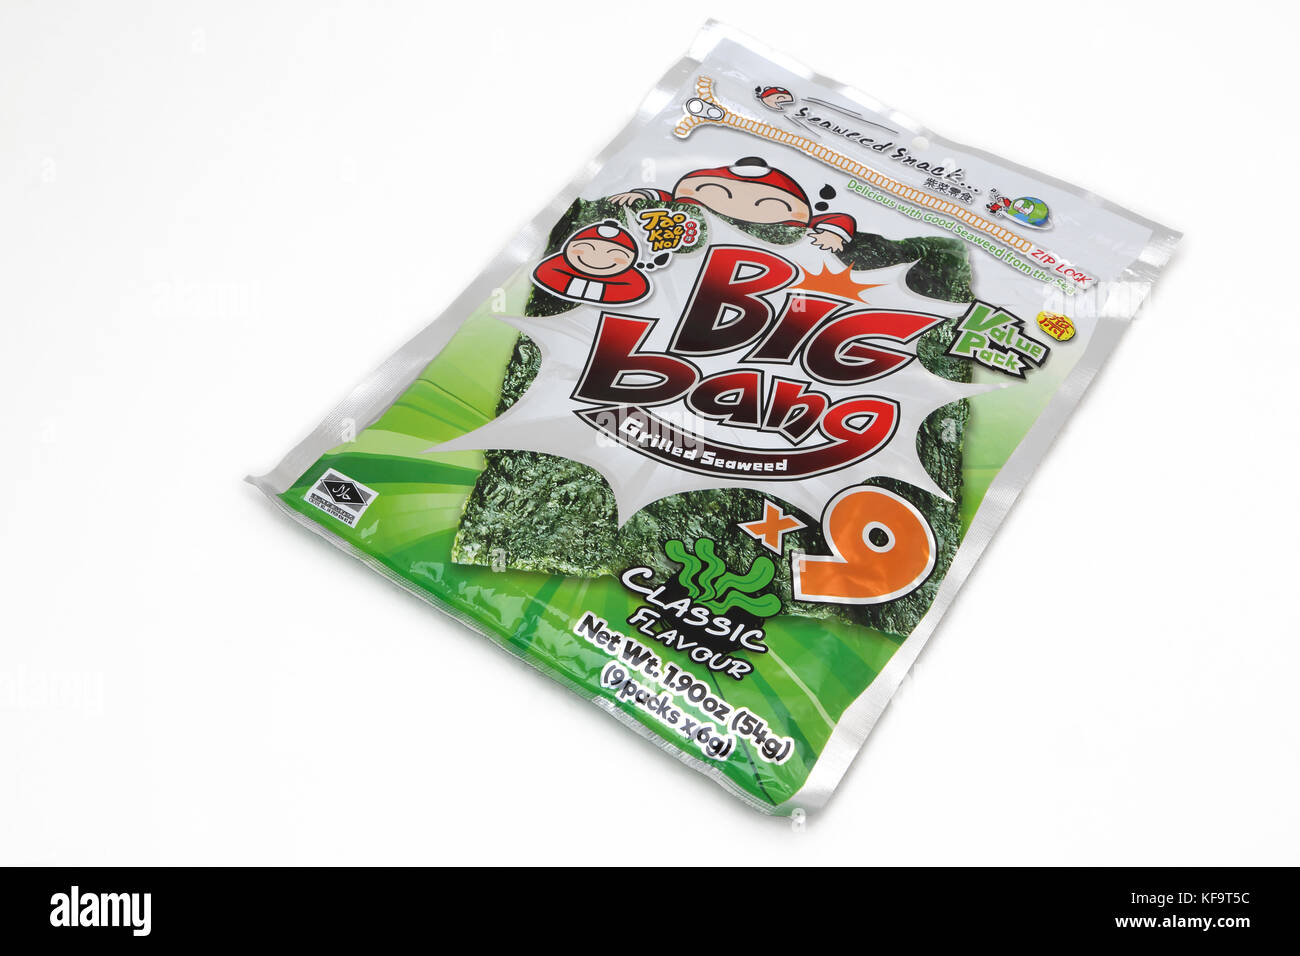 Chinese Tao Kae Noi Big Bang Grilled Seaweed Value Pack Stock Photo